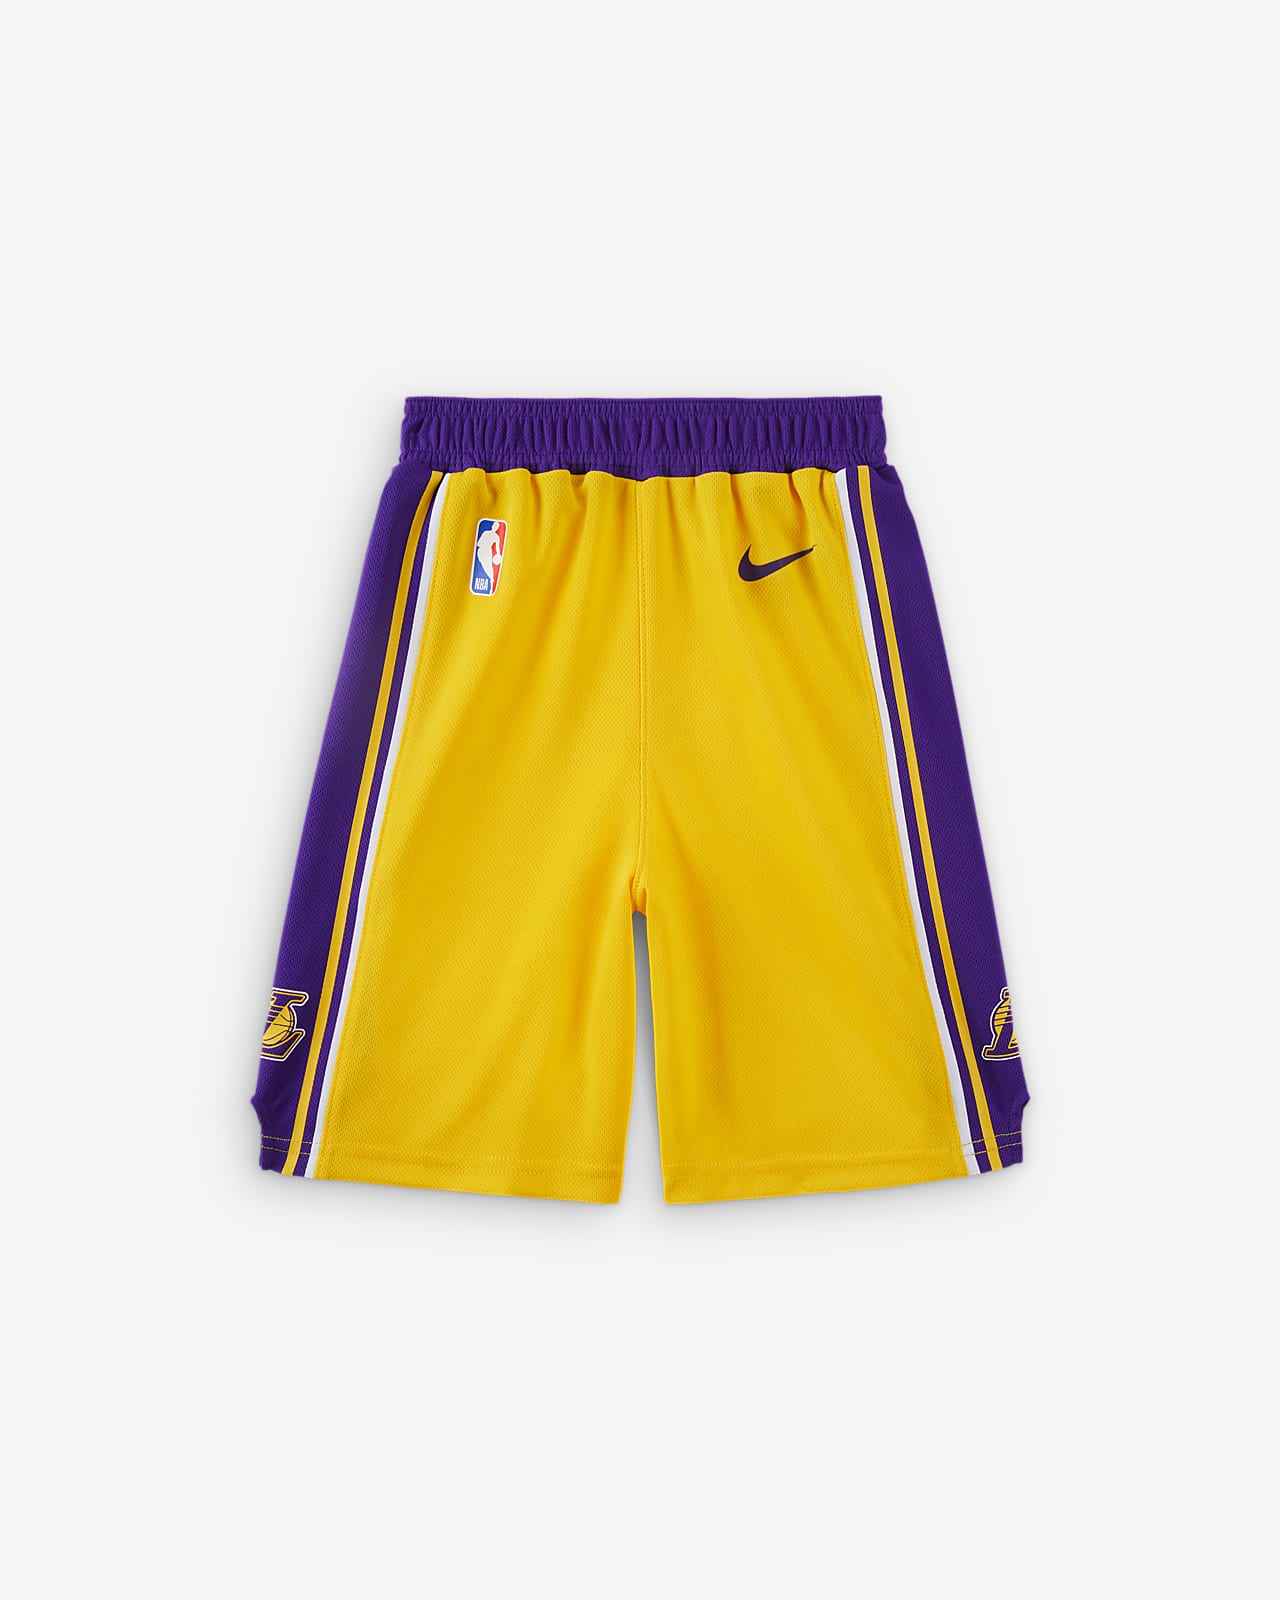 洛杉矶湖人队 Icon Edition Nike NBA 幼童短裤